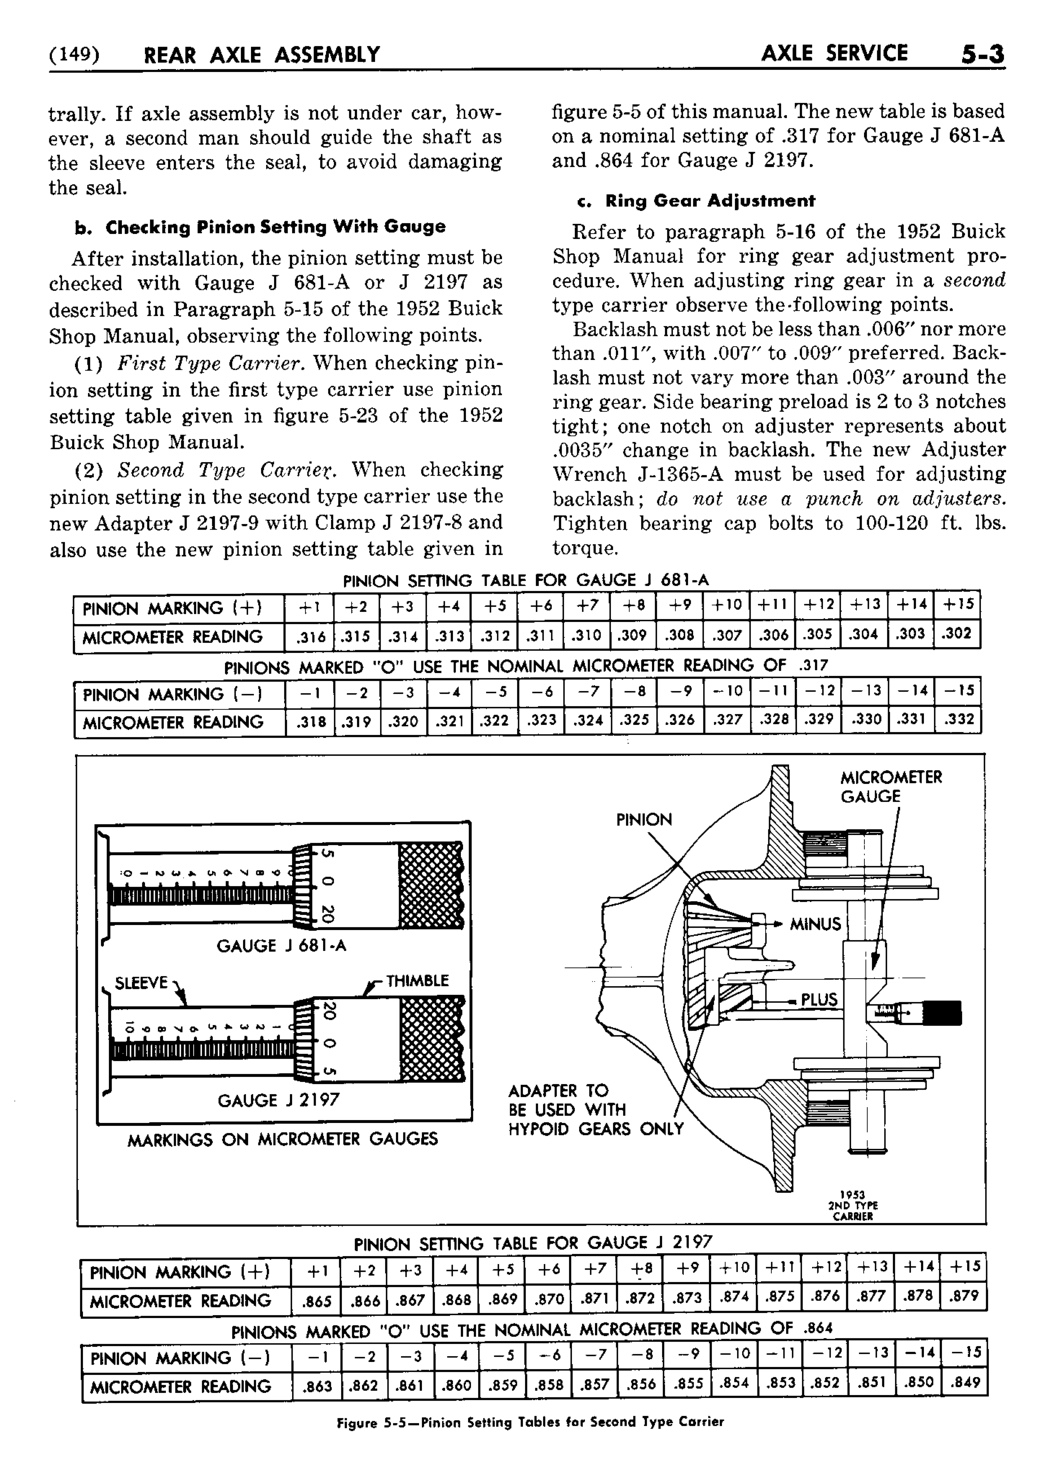 n_06 1953 Buick Shop Manual - Rear Axle-003-003.jpg